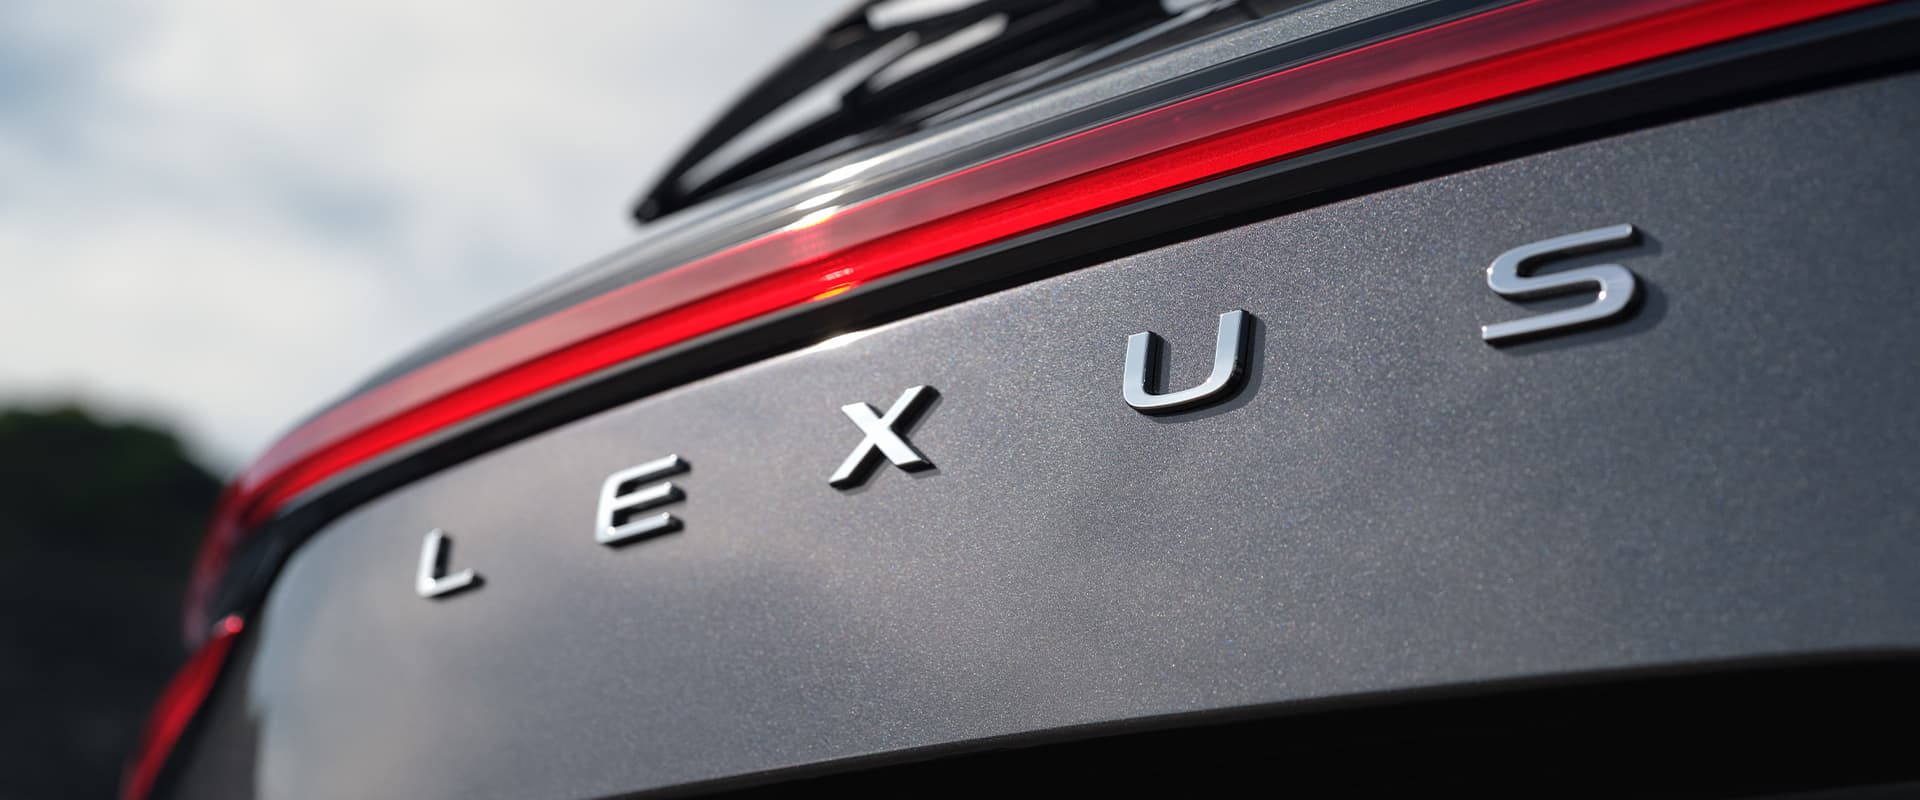 Thông số chi tiết Lexus NX 350 F SPORT